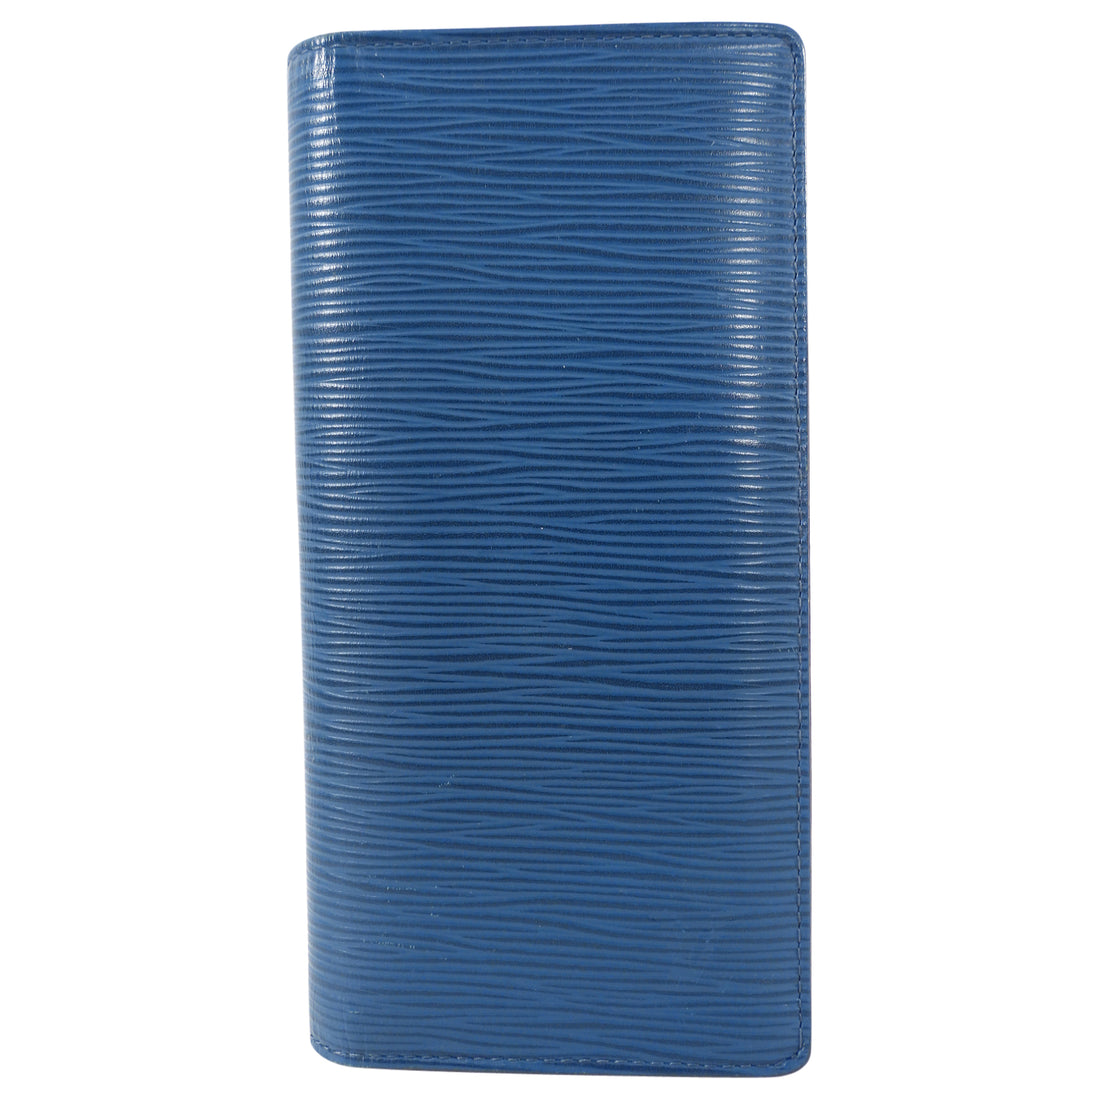 Louis Vuitton Blue Long Wallet